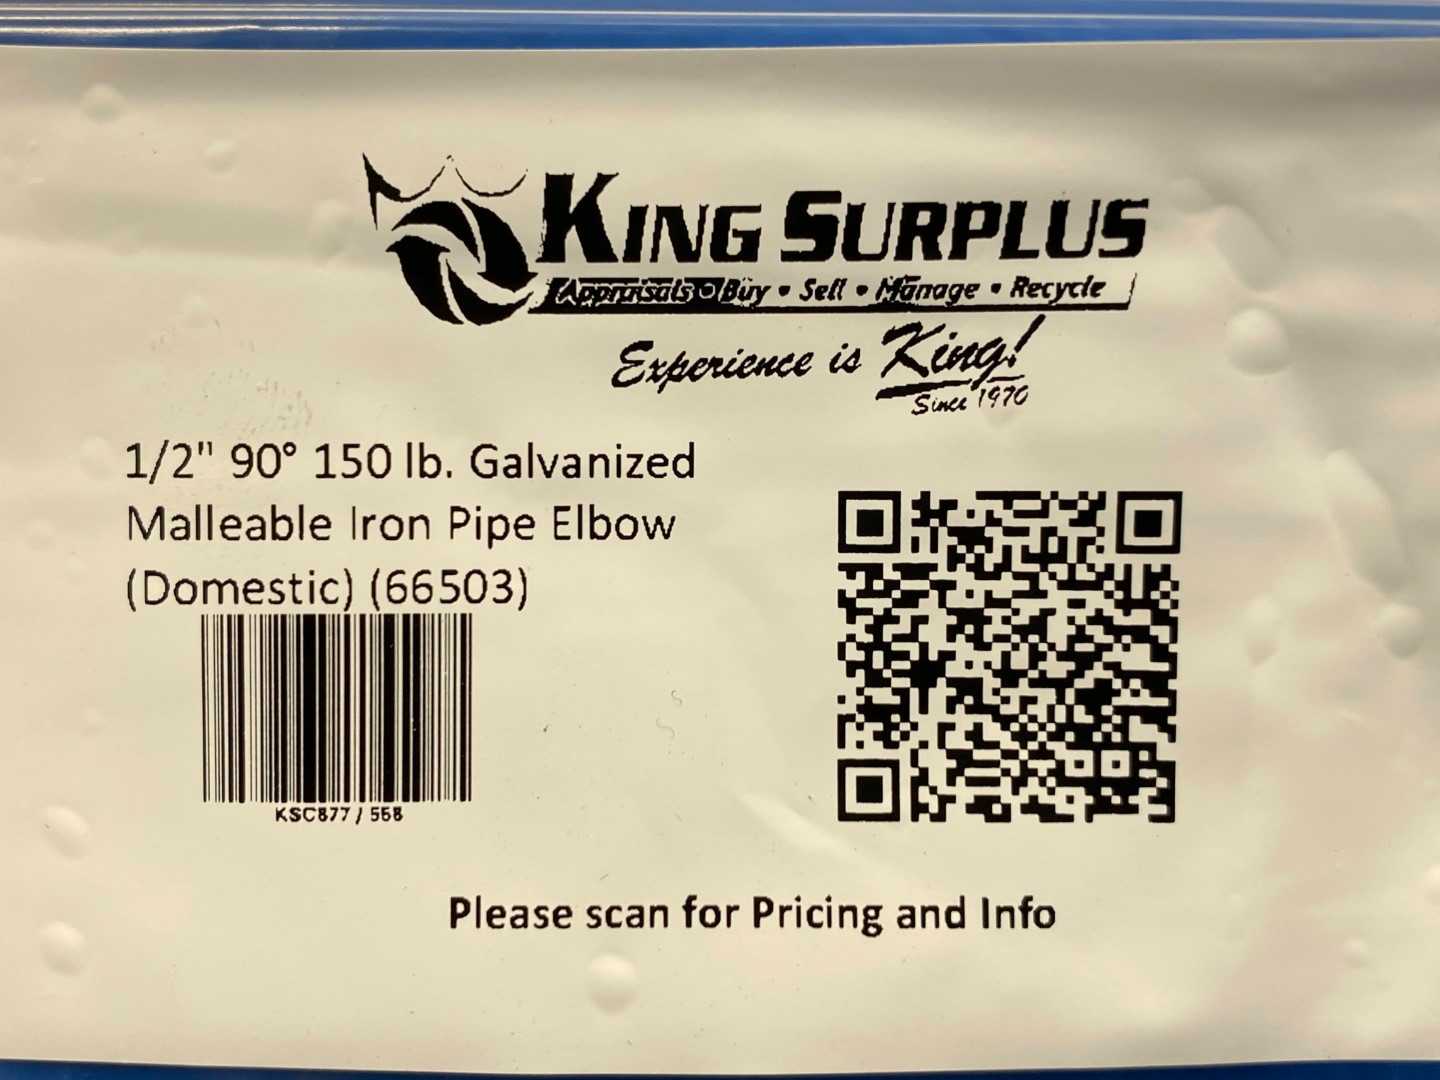 1/2" 90° 150 lb. Galvanized Malleable Iron Pipe Elbow (Domestic) (66503)